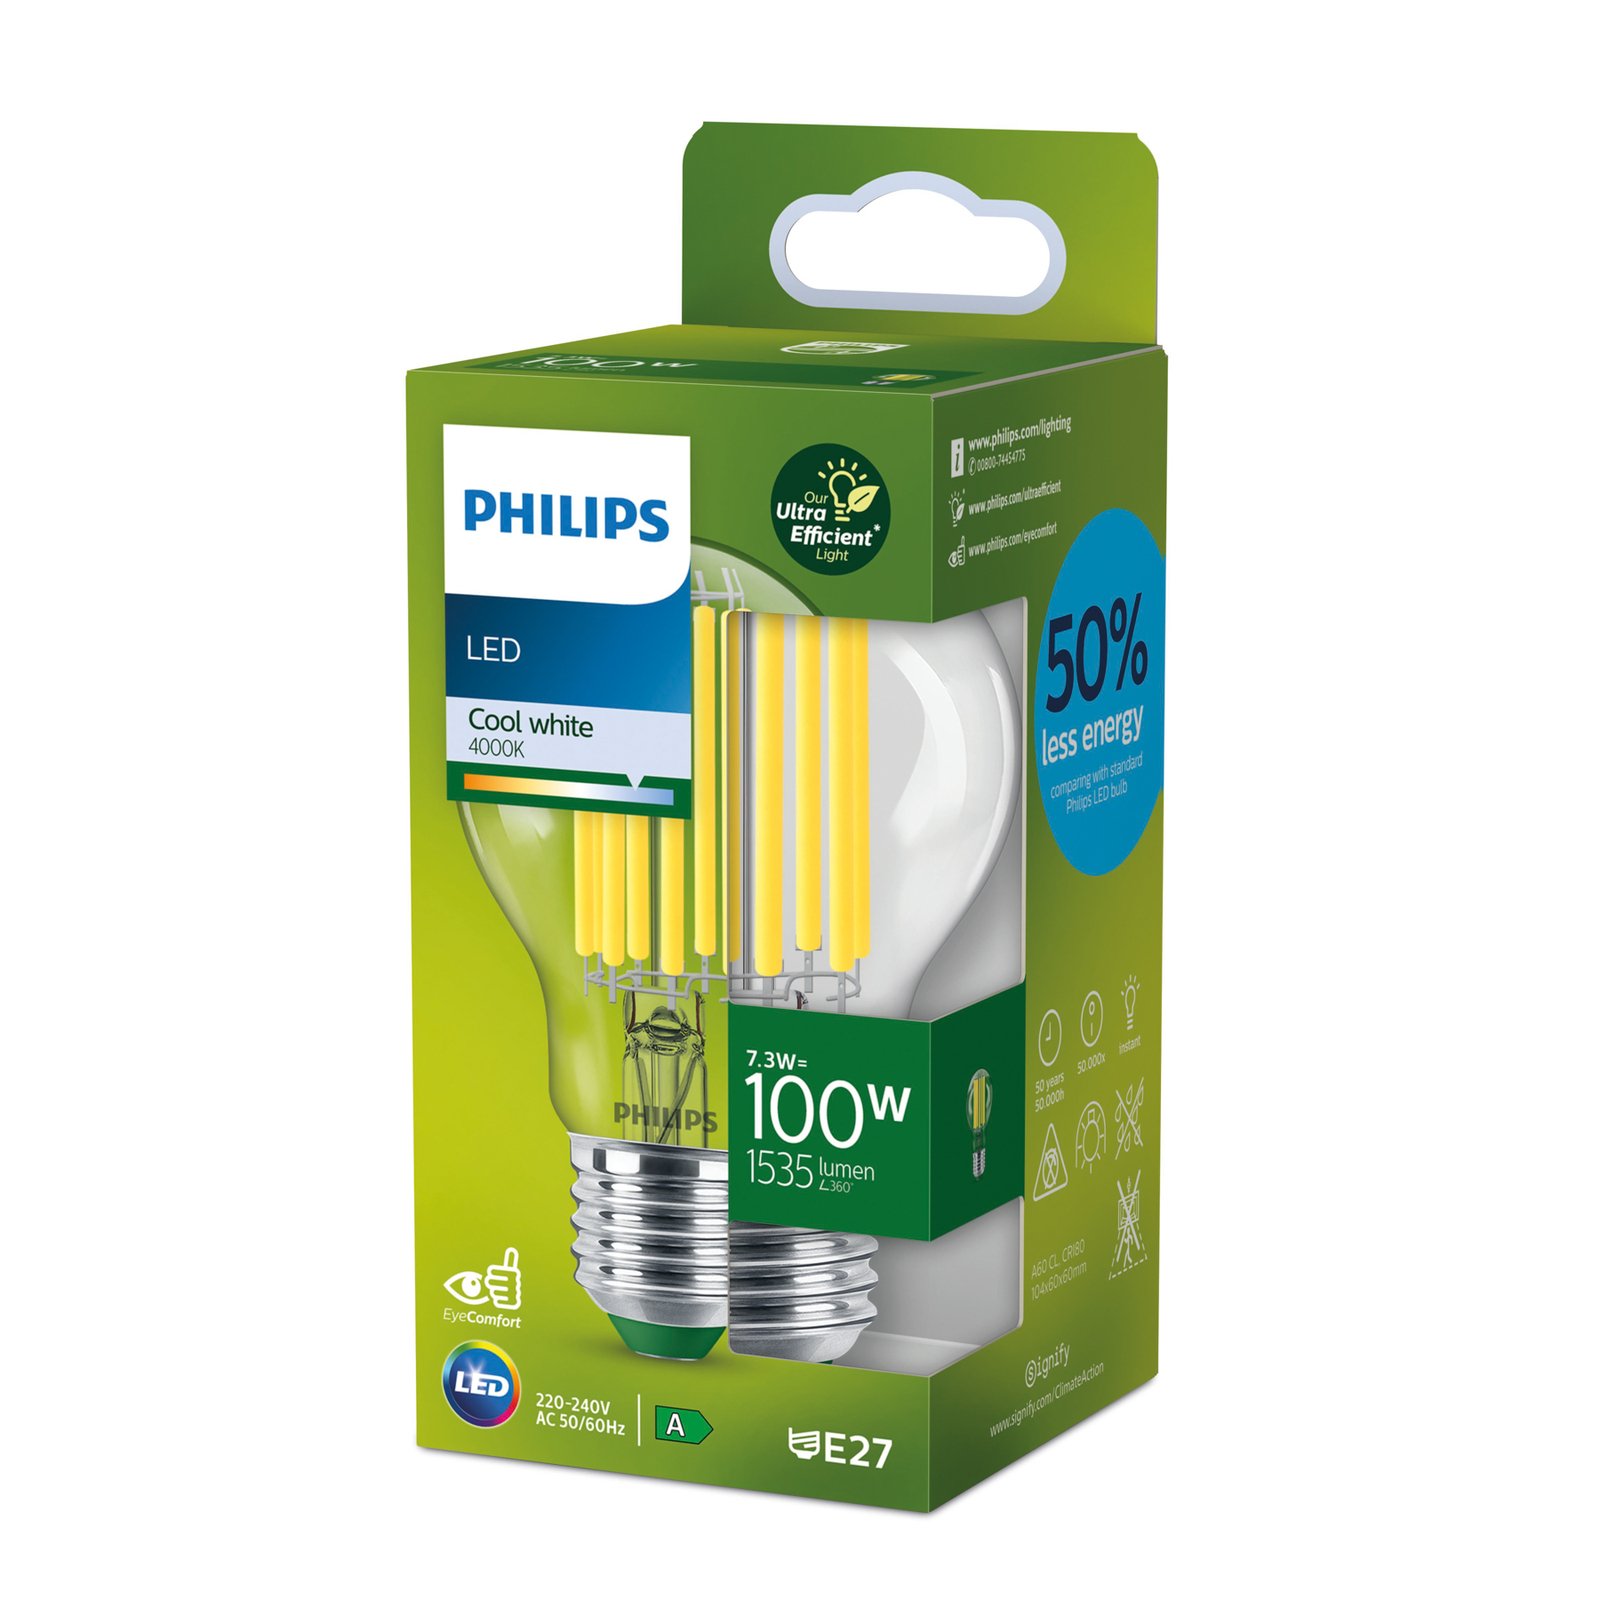 Philips E27 LED A60 7,3W 1535lm 4.000K claro